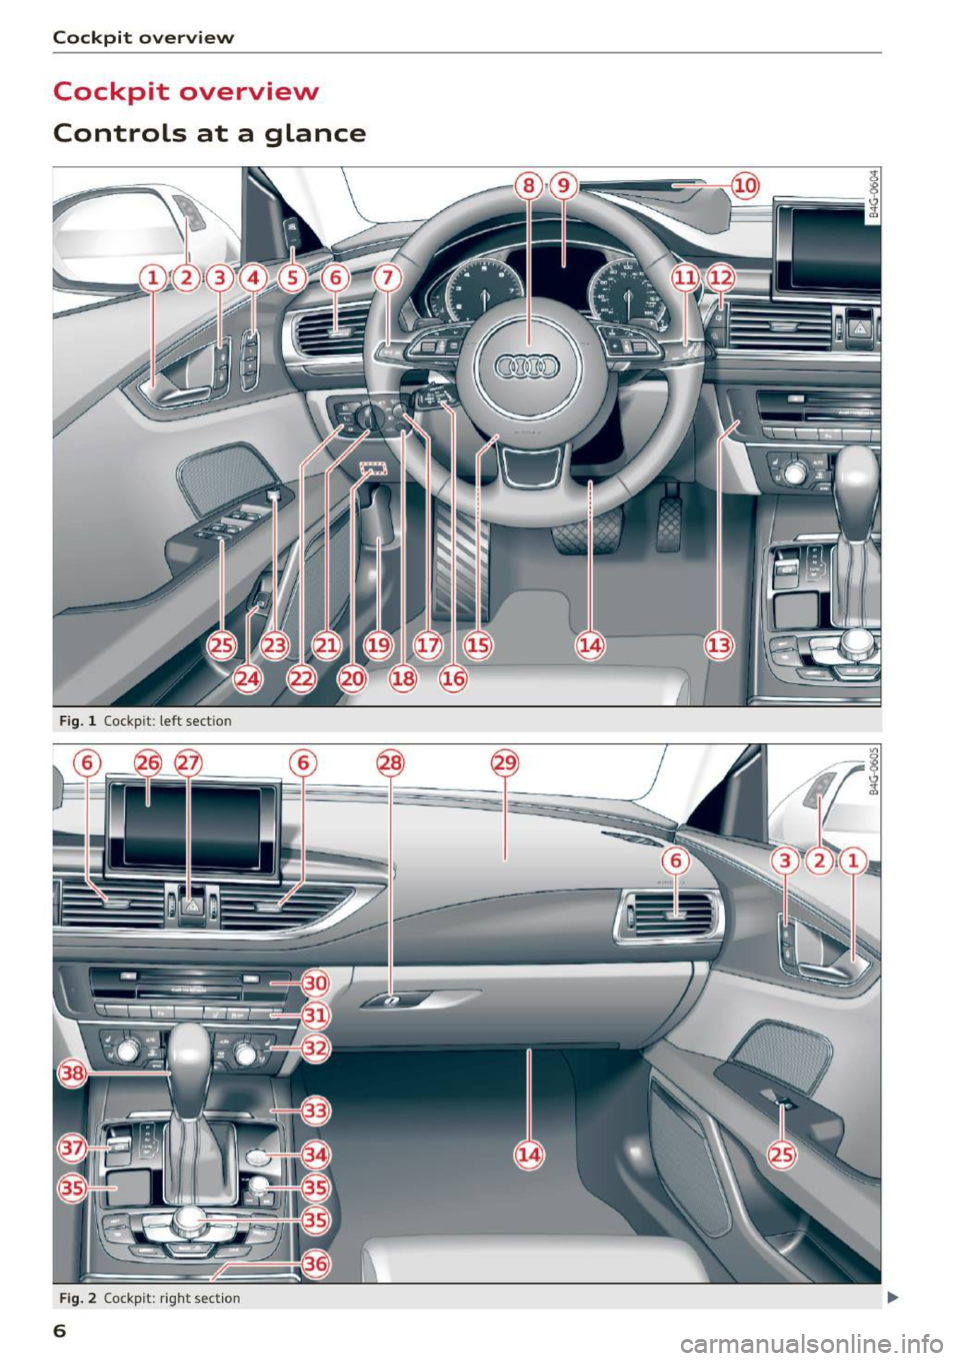 AUDI A7 2017  Owner´s Manual Cockpit  overview 
Cockpit  overview 
Controls  at  a  glance 
Fig.  1  Cockpit : left  section 
F ig.  2  Cockpit:  rig ht sect ion 
6  